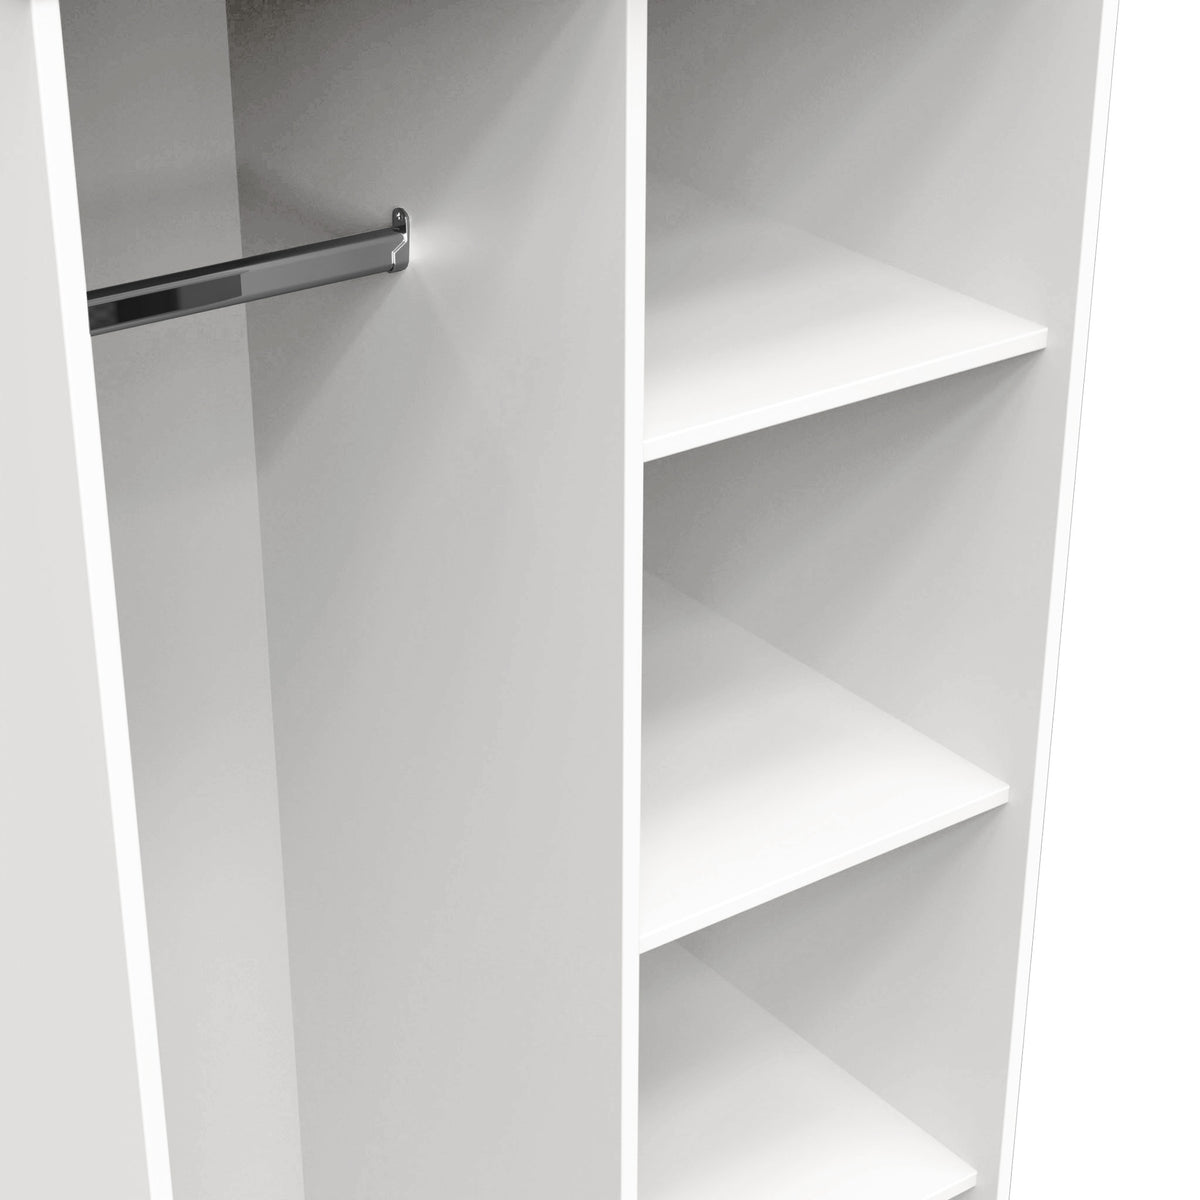 Hudson Tall Open Shelf Unit in White by Roseland Furniture